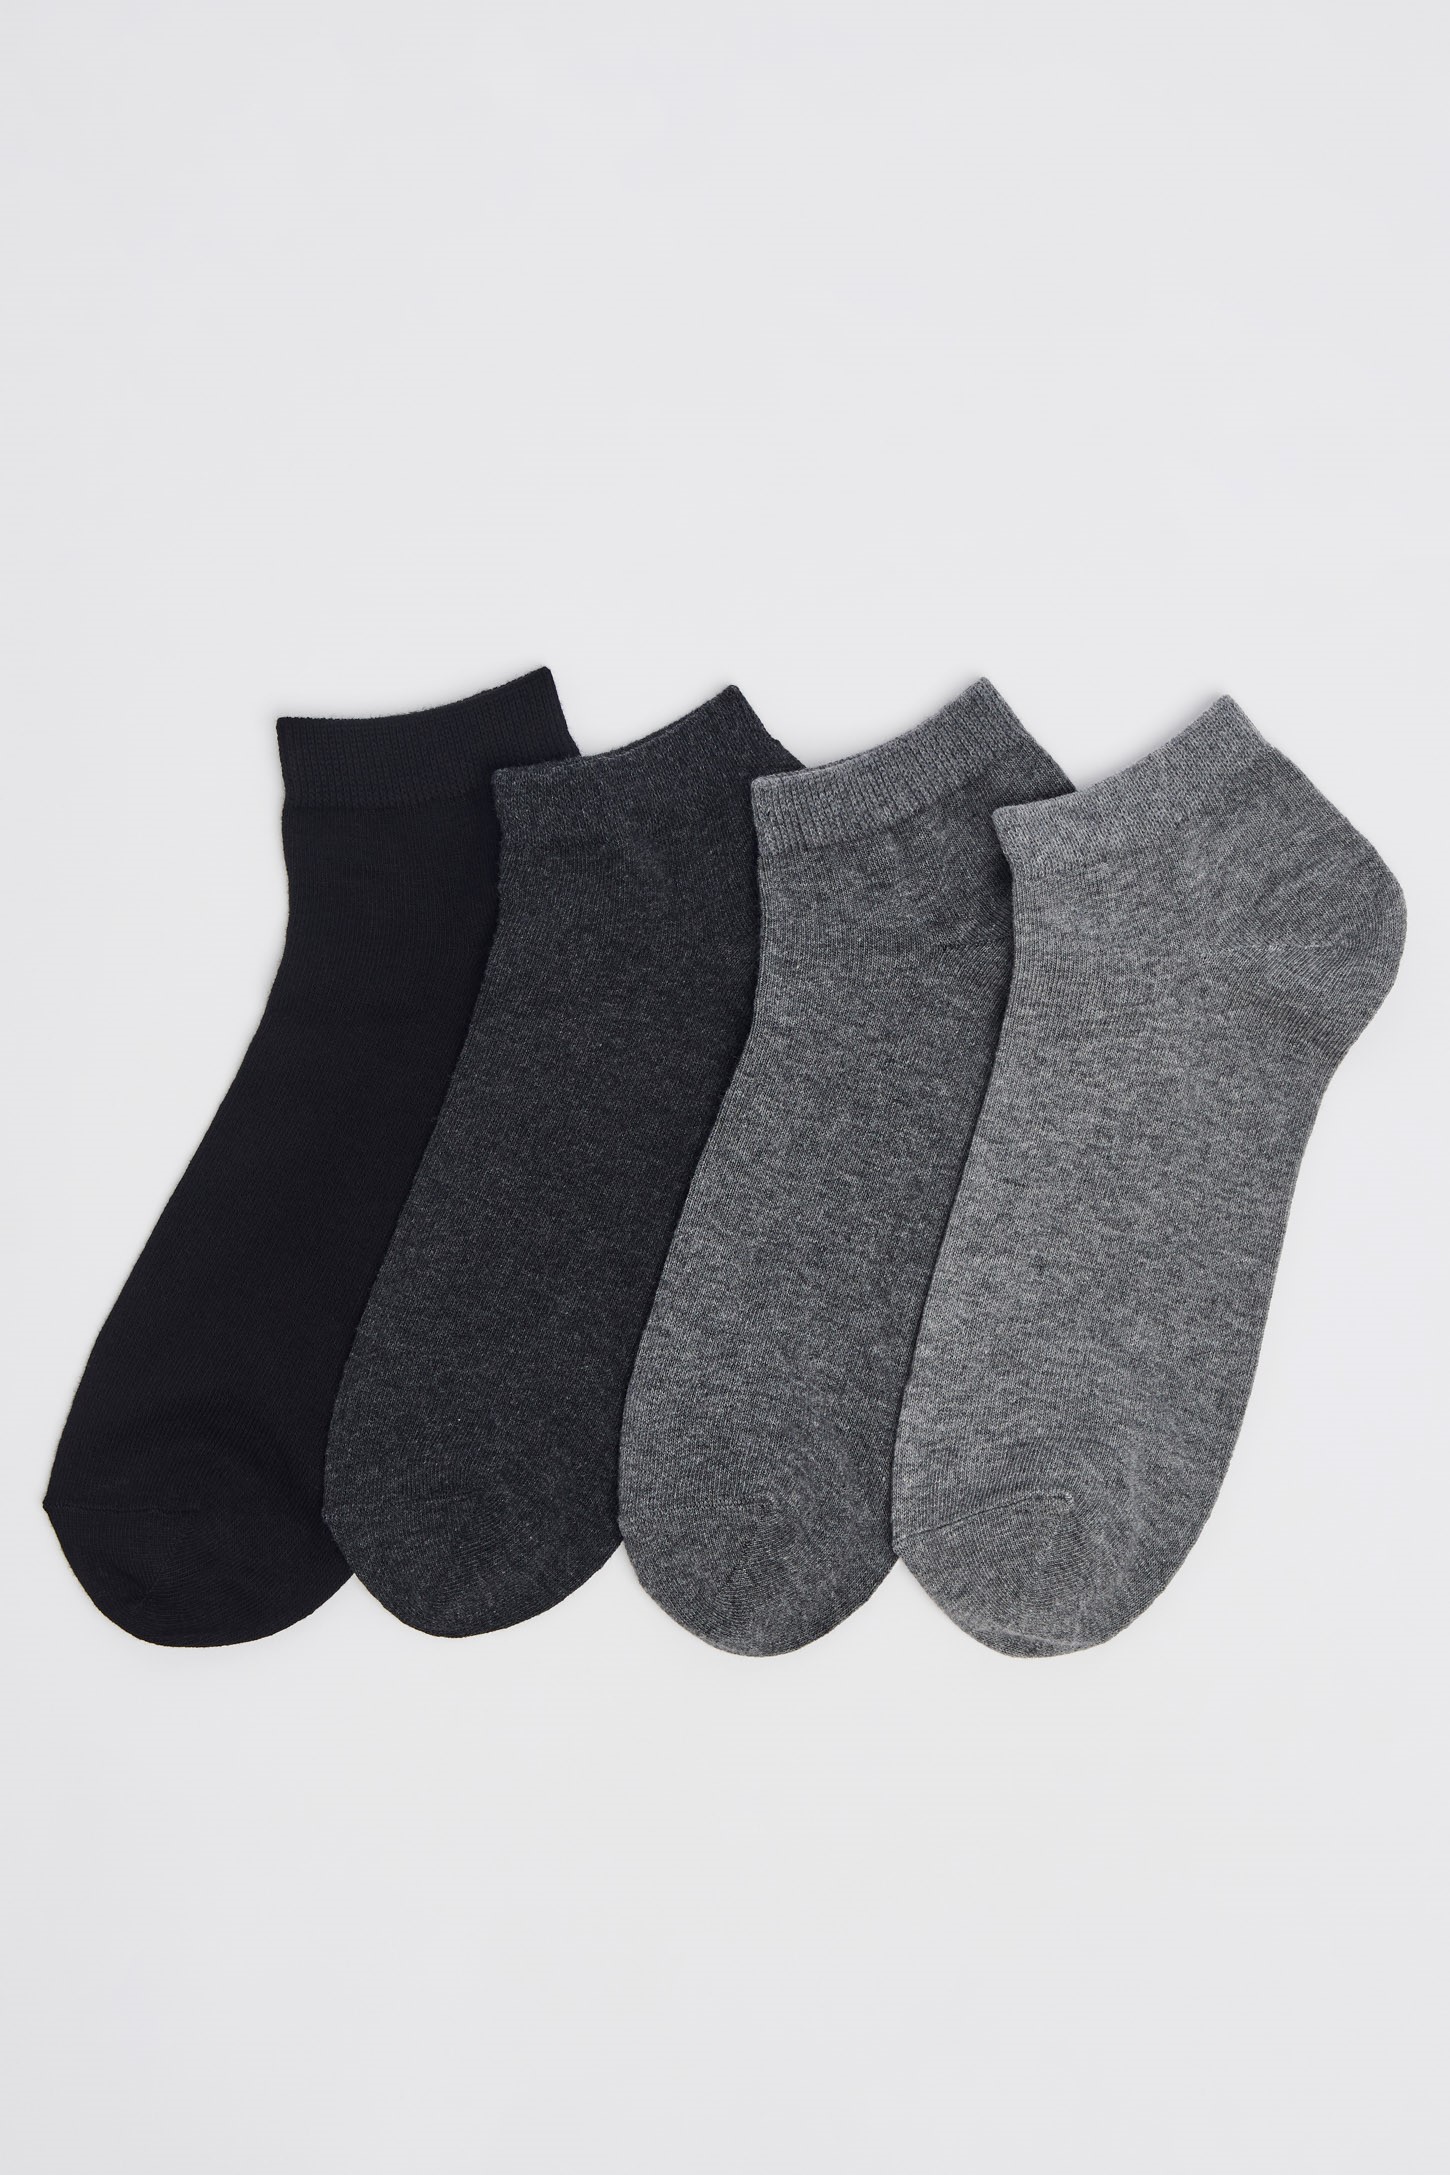 Pack of 4 pairs of ankle socks - Men | Aubainerie